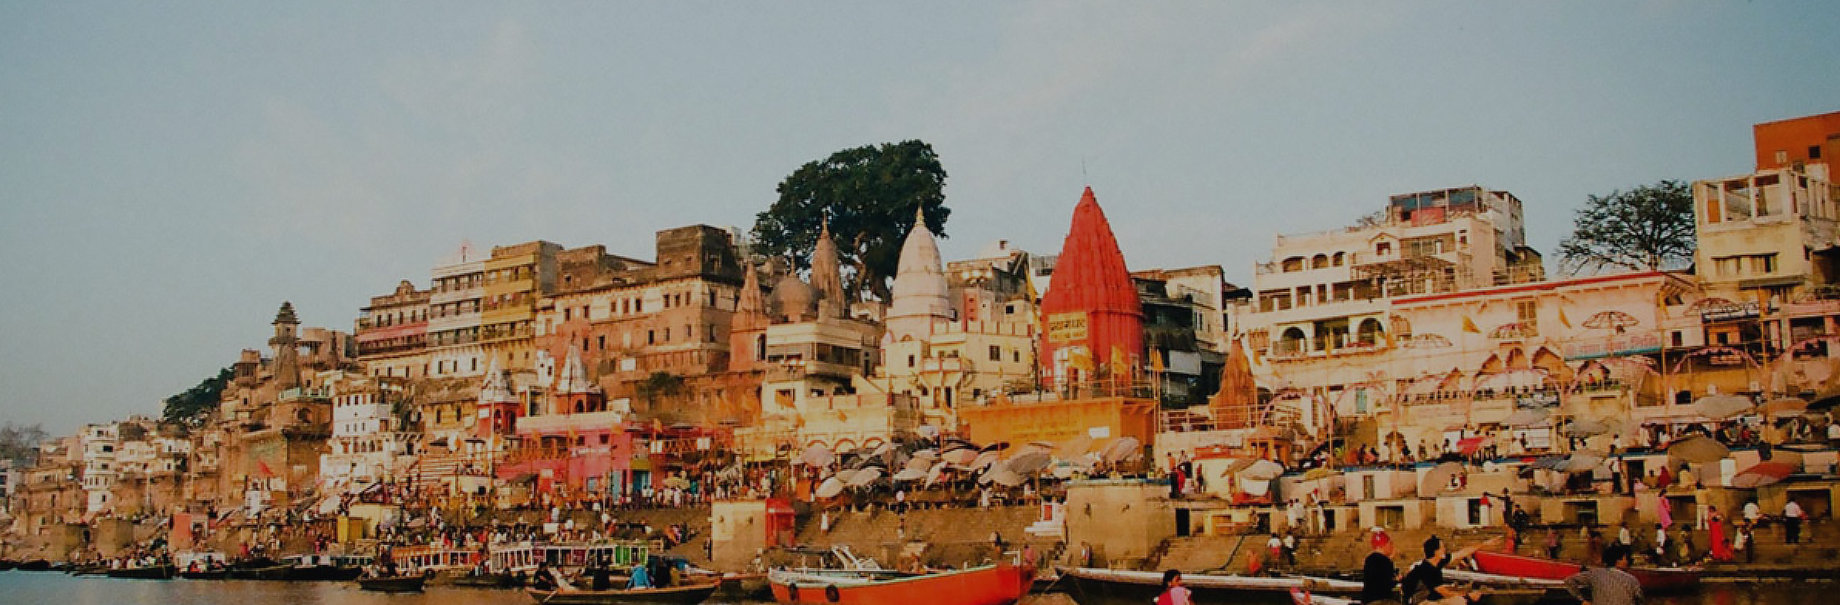 Varanasi/Banaras/Kashi